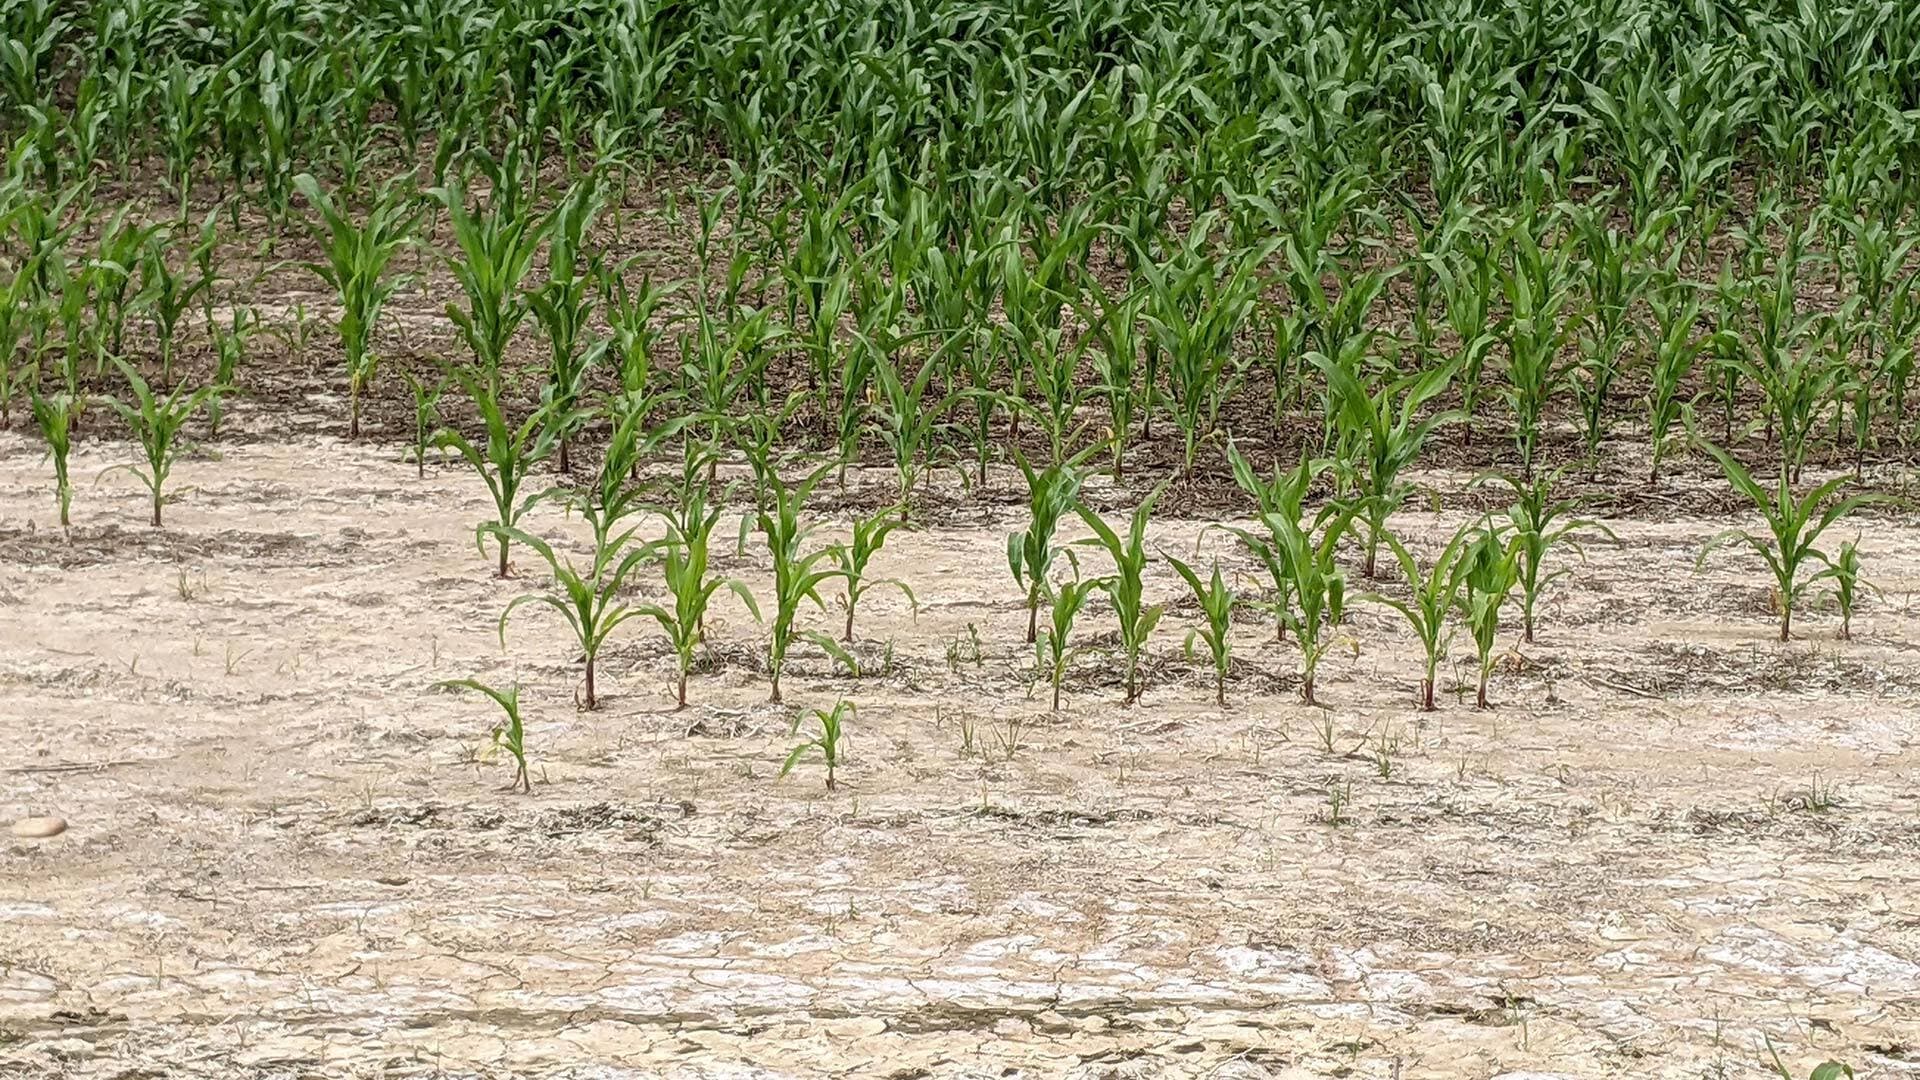 corn in field damaged by saltwater intrusion